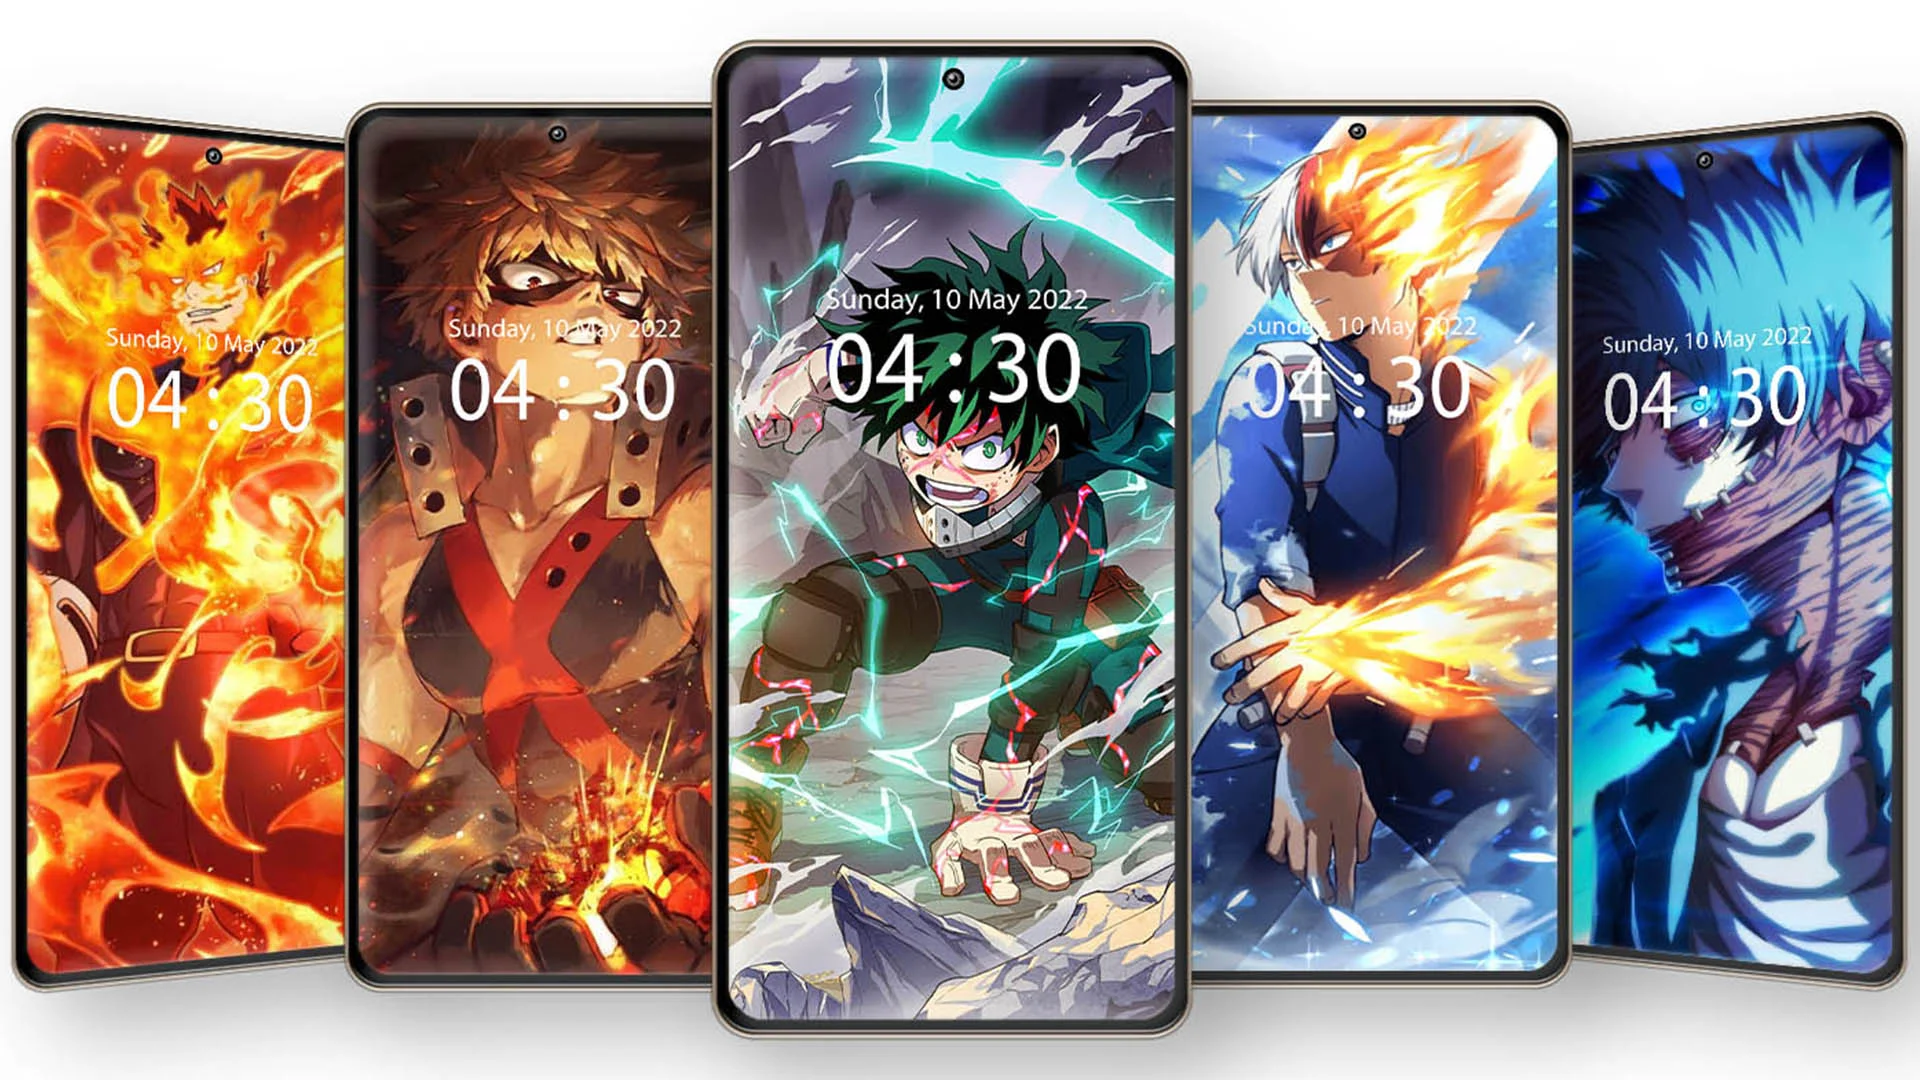 Anime Wallpaper HD 4K APK MOD (Premium Unlocked/ VIP/ PRO)